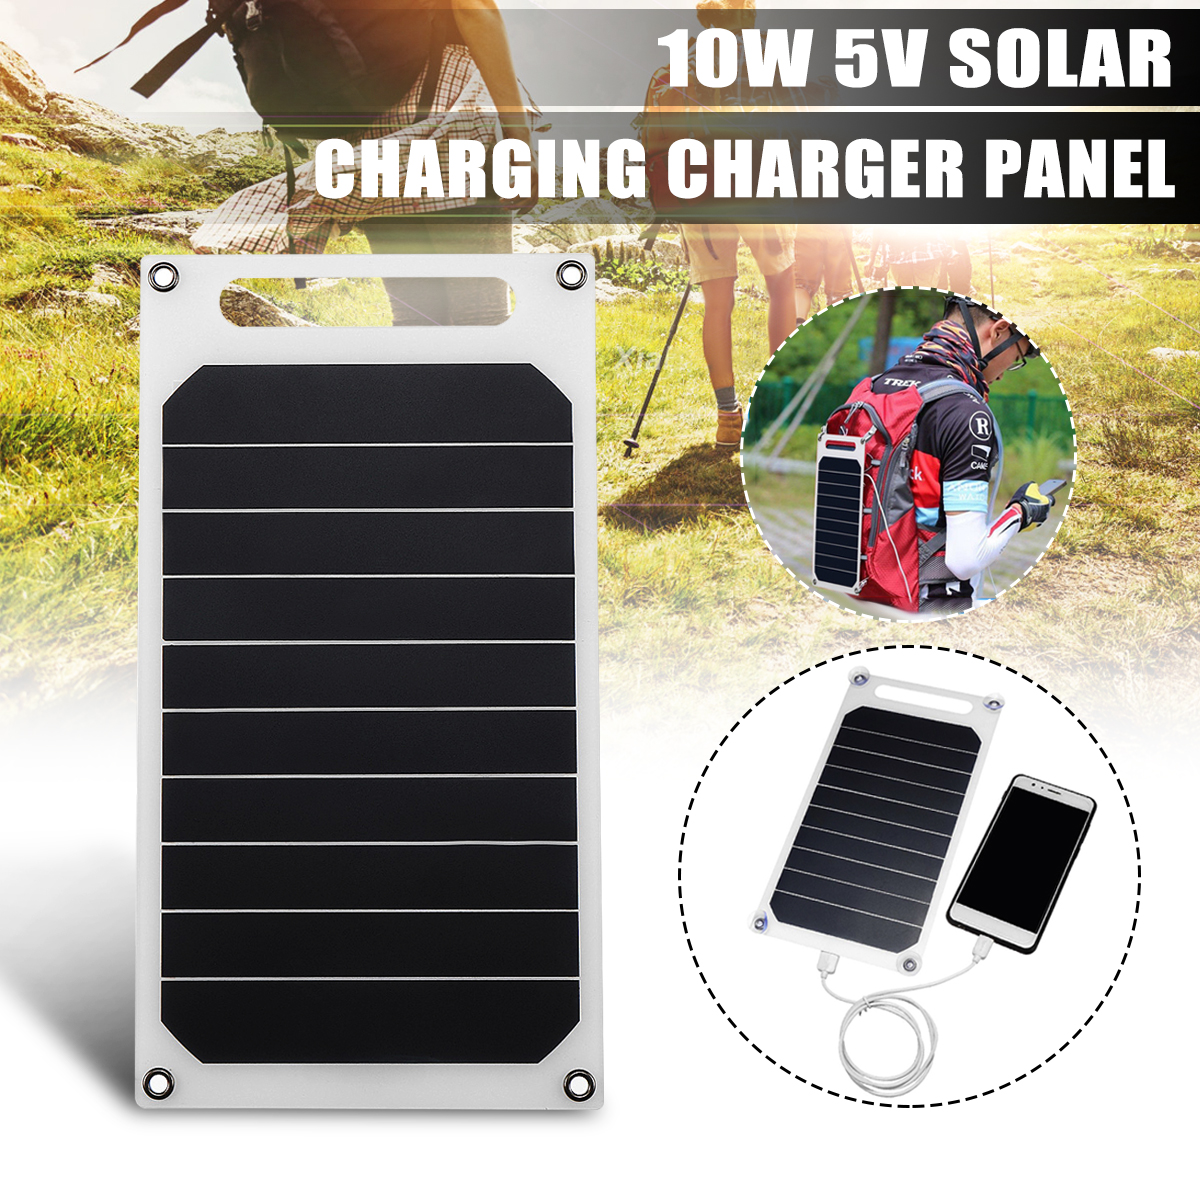 Excellwayreg-5V-10W-Portable-Solar-Panel-Slim--Light-USB-Charger-Charging-Power-Bank-Pad-1297325-2